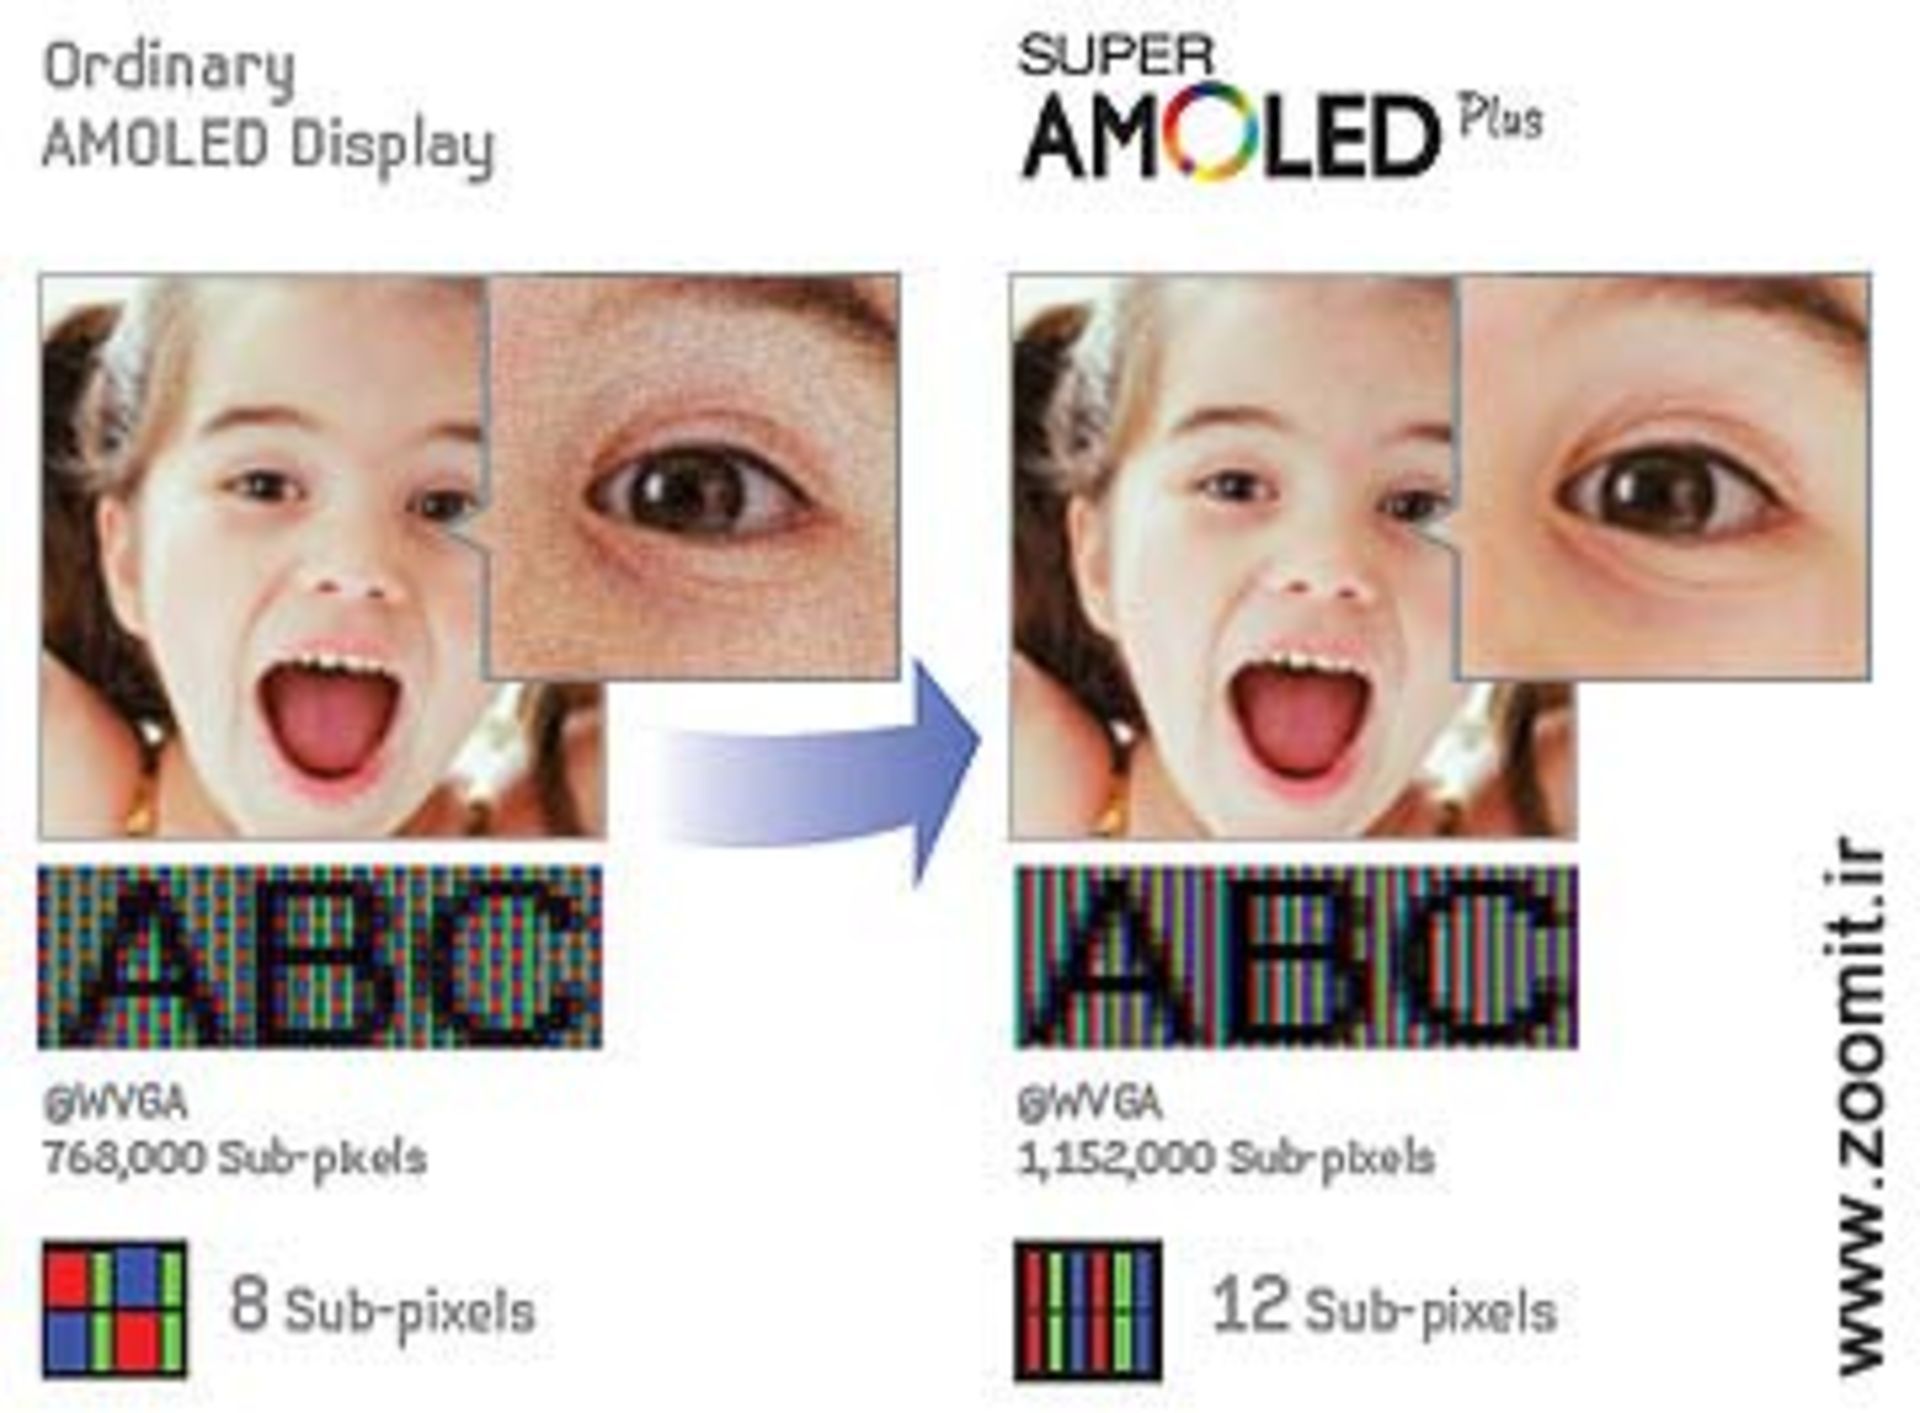 Super AMOLED vs Normal LCD